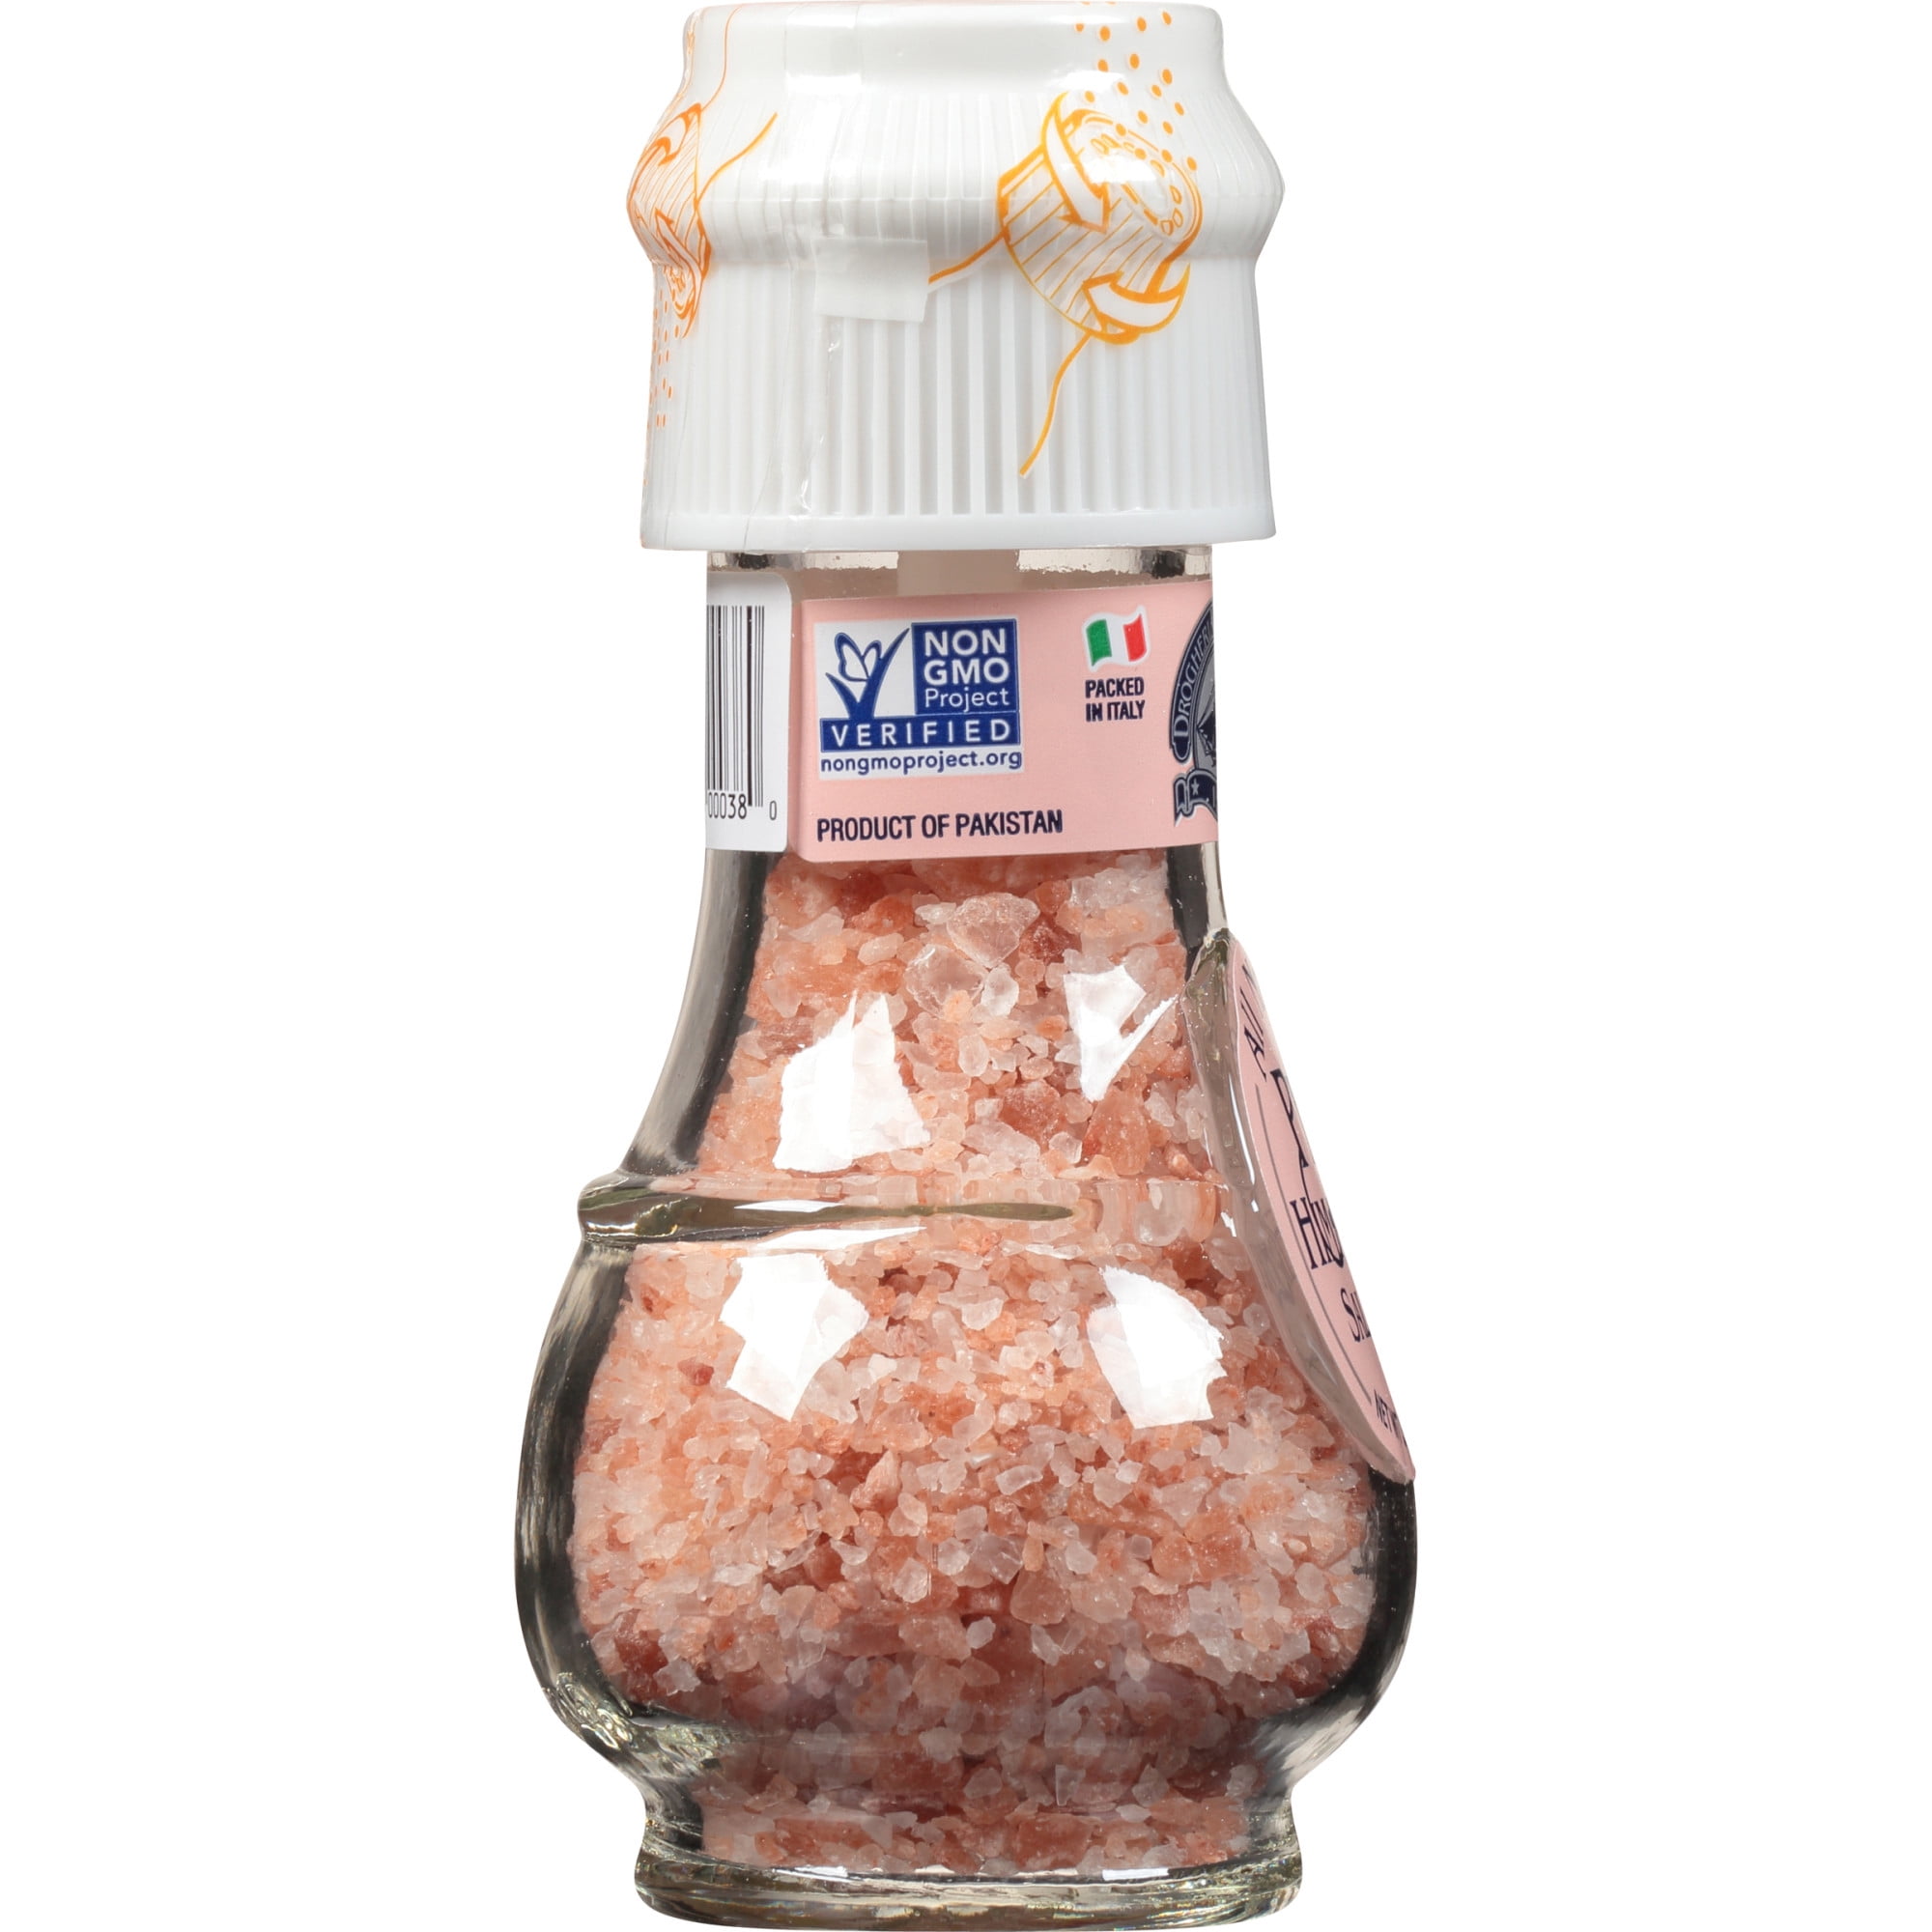 Drogheria & Alimentari, Moulin à gros sel entièrement naturel Pink  Himalayan, 3,18 oz (90 g)